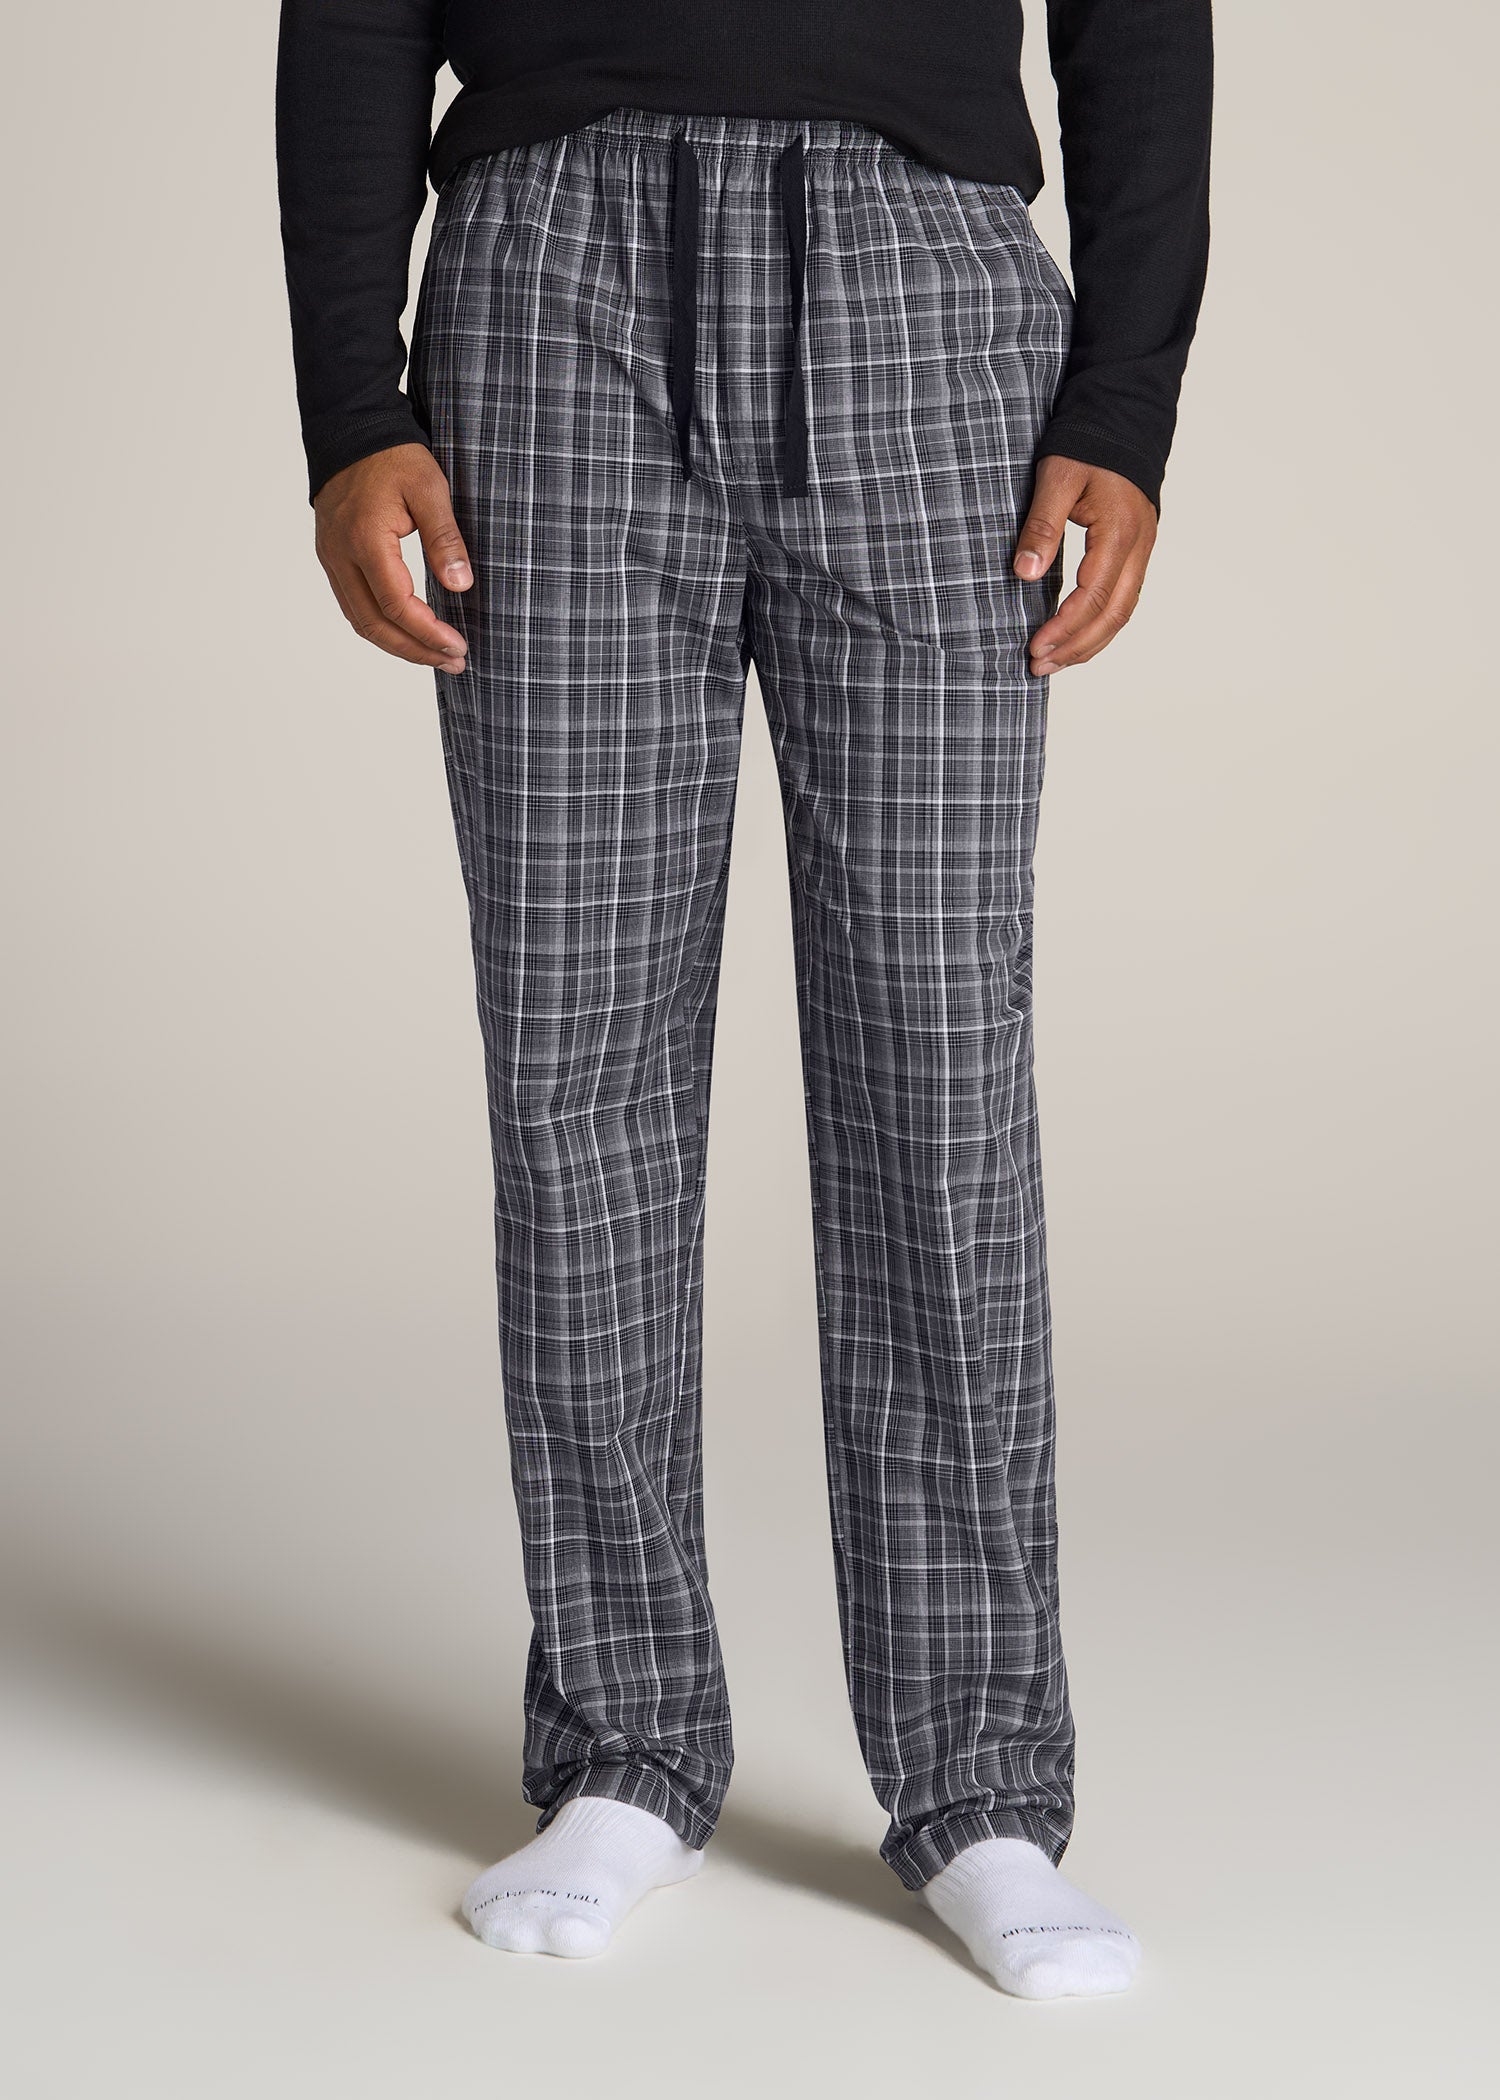 Womens Men's Cotton Dot Lounge Pants Warm Pyjama Bottoms PJs Nightwear Size  S-XL